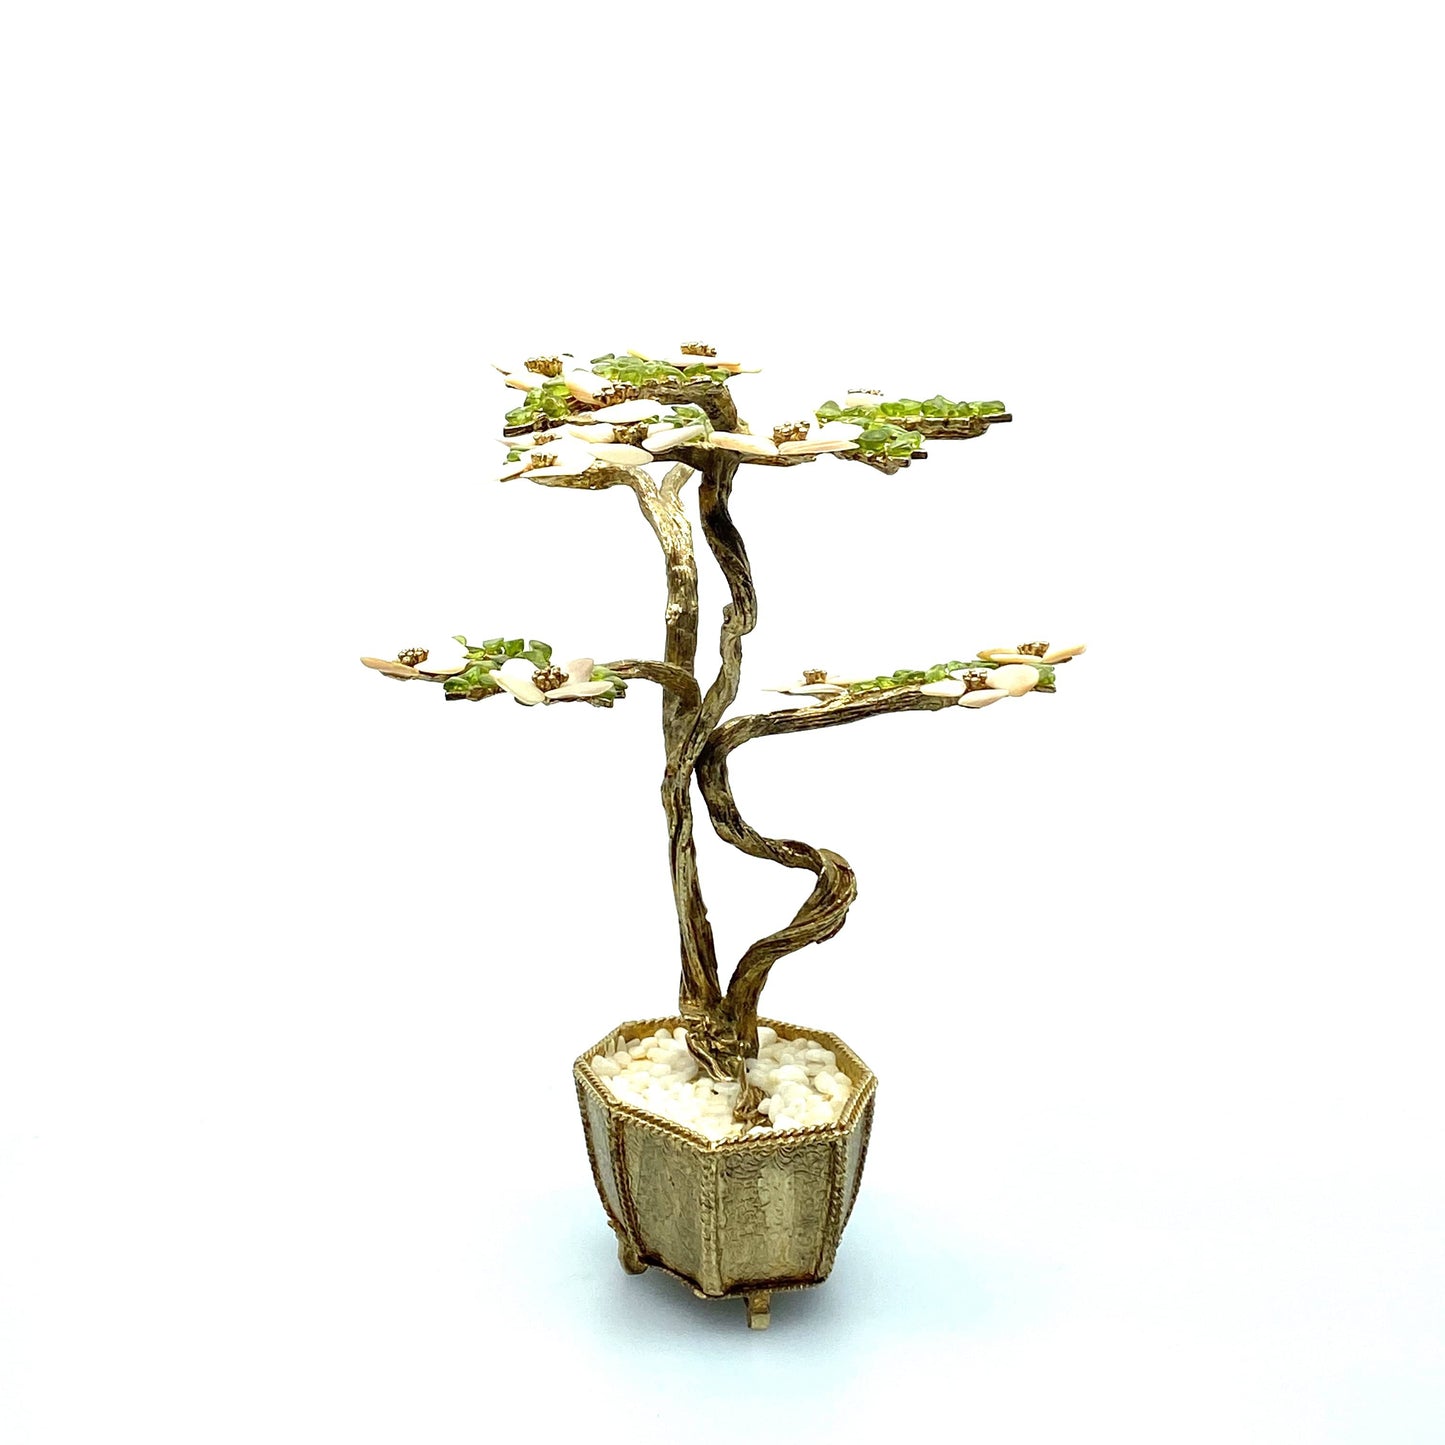 Vintage Brass Bonsai Tree Sculpture with Jade - 1970s